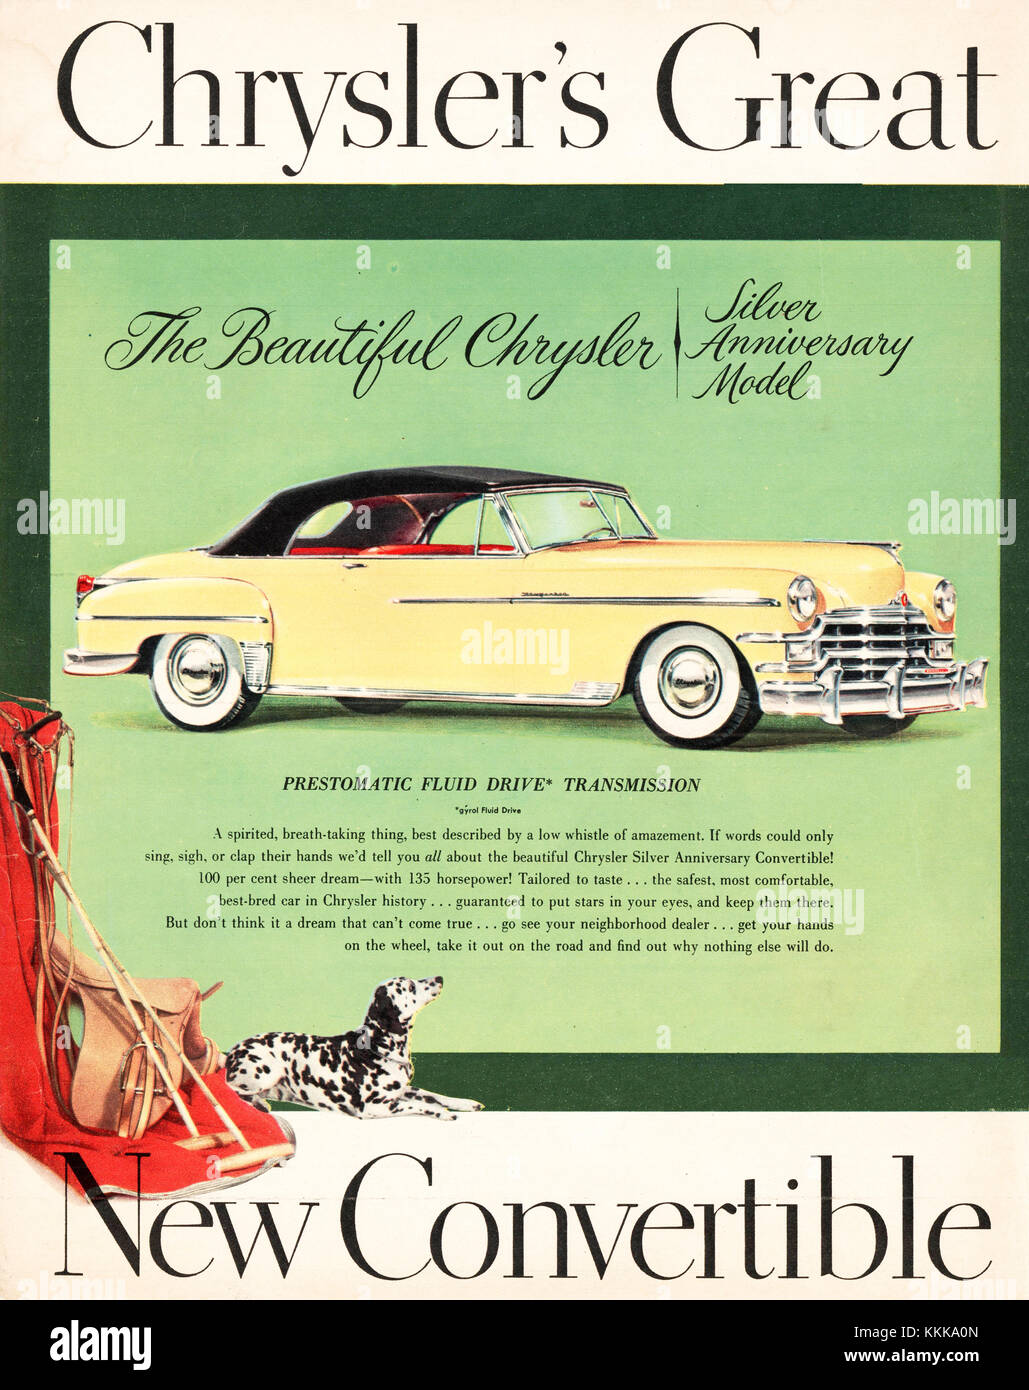 1949 U.S. Magazine Chrysler Convertible Advert Stock Photo